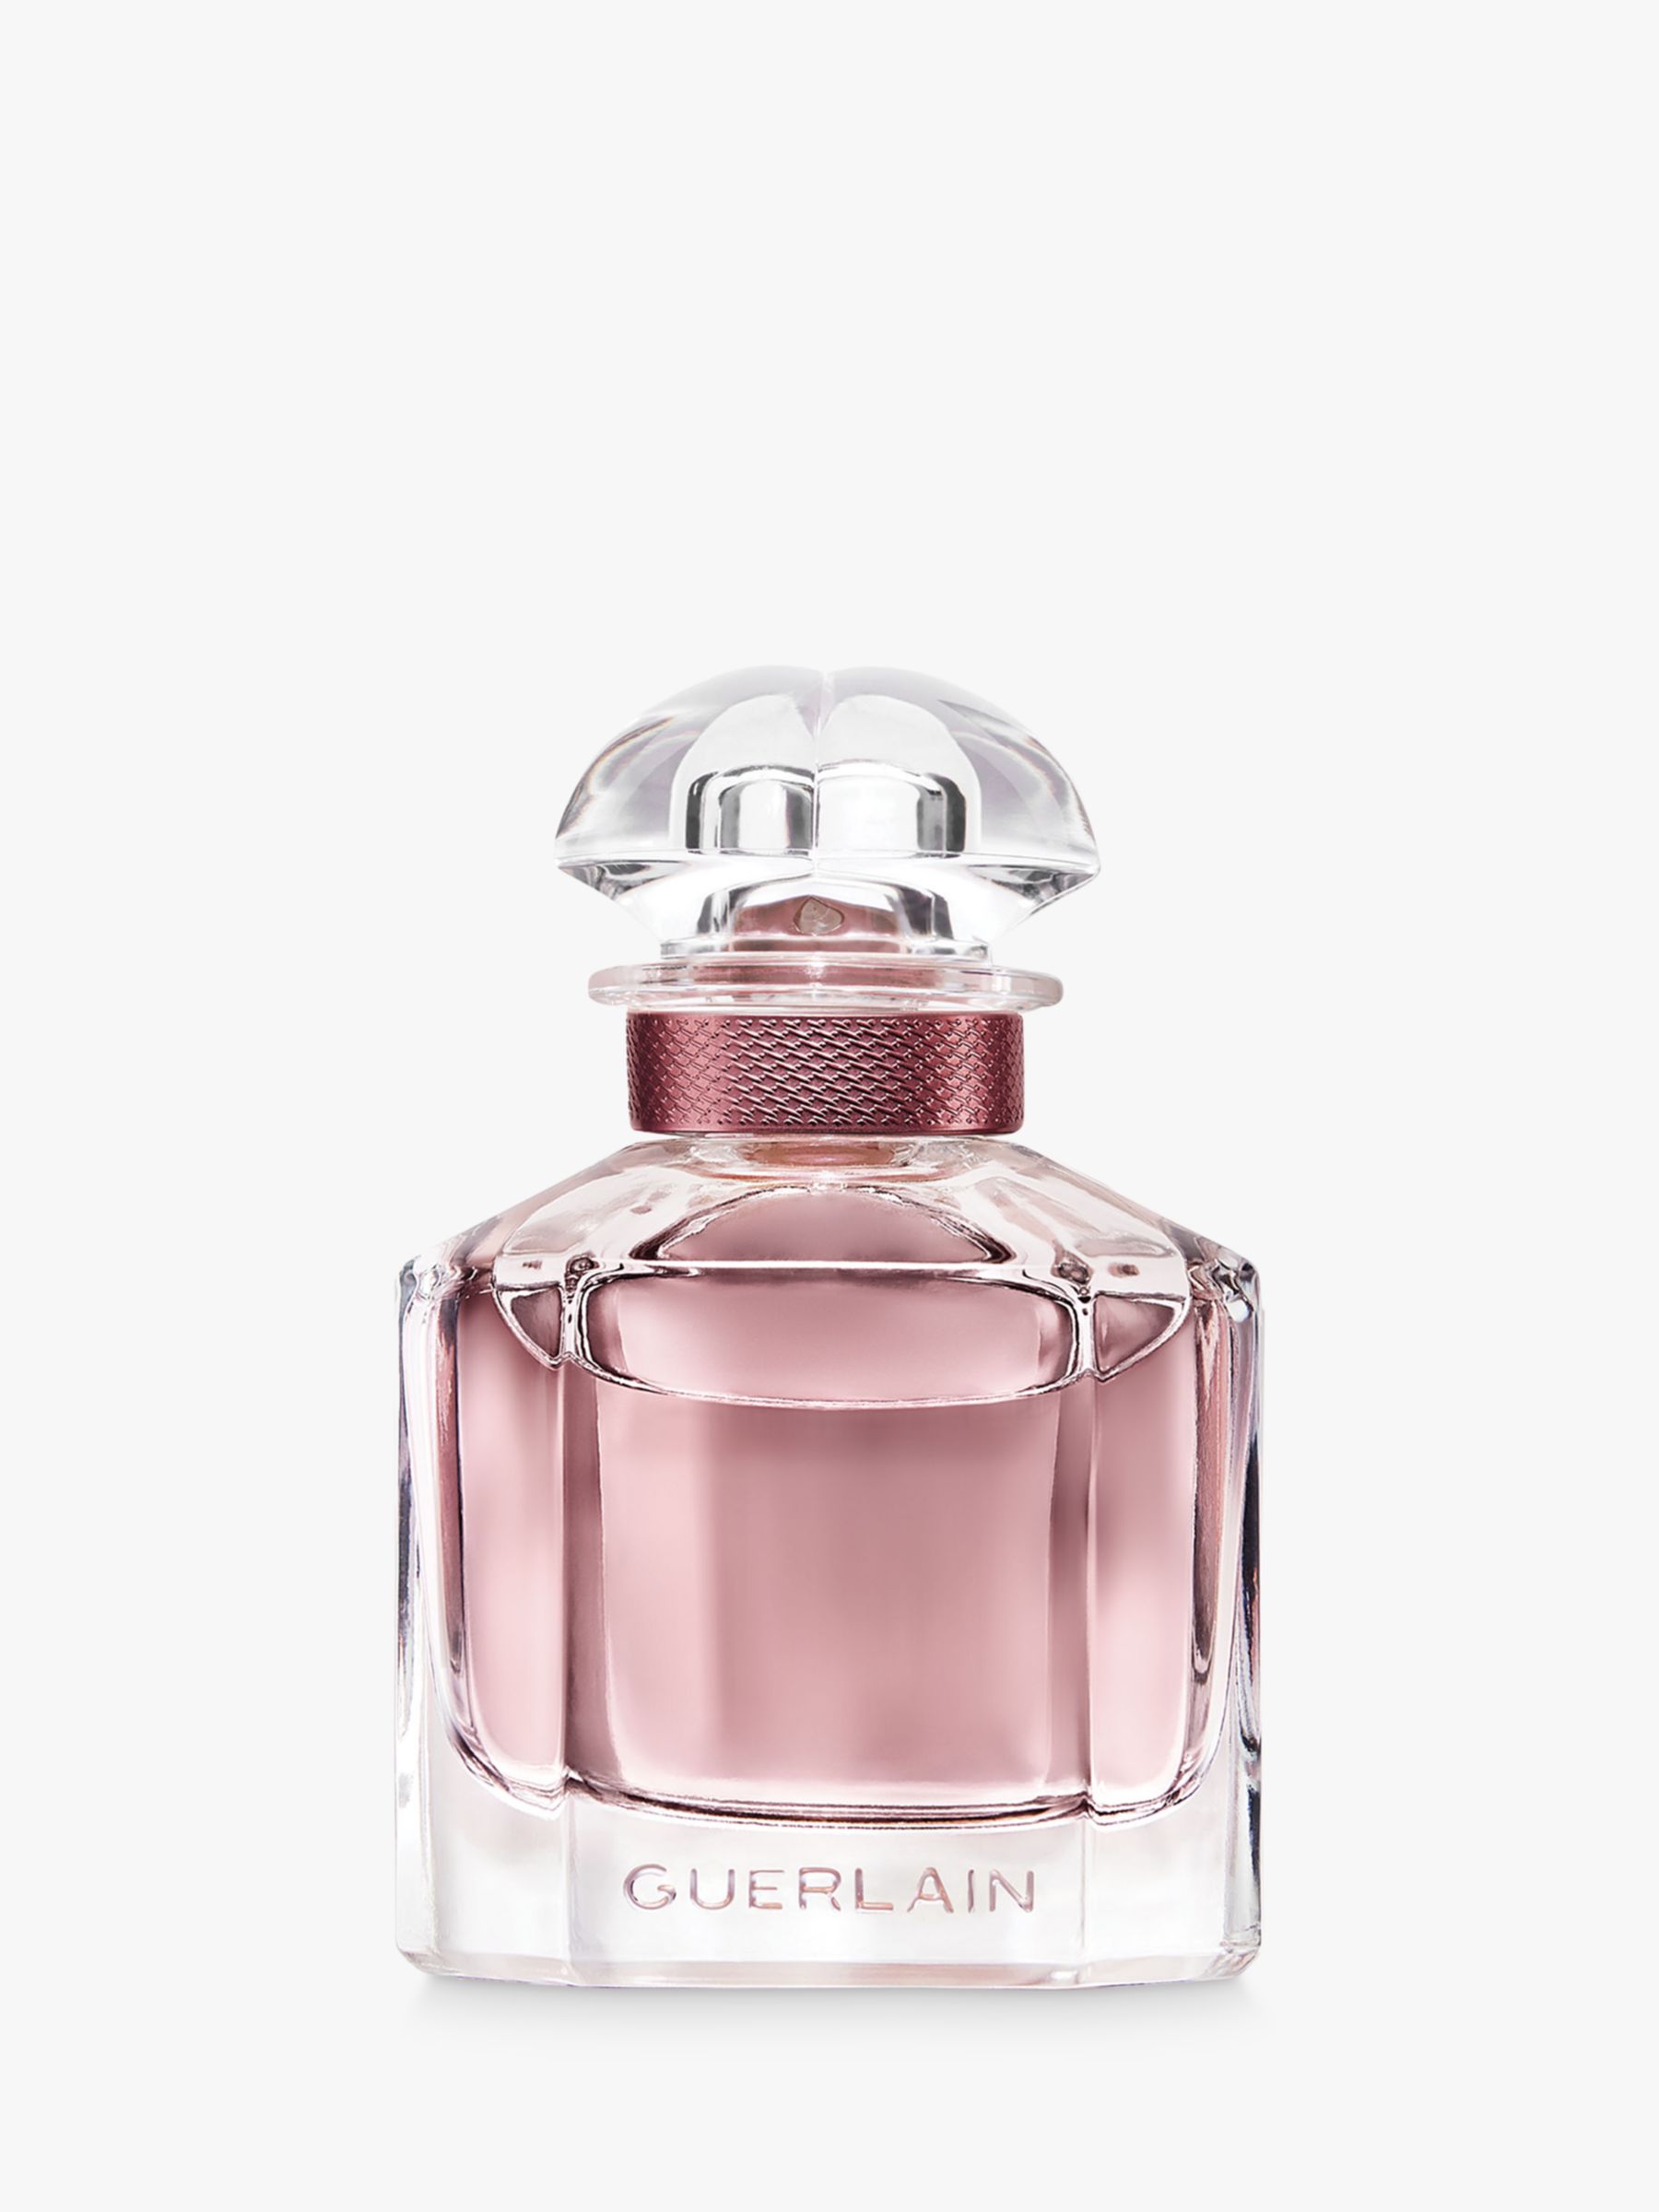 Guerlain Mon Guerlain Eau de Parfum Intense, 50ml at John Lewis & Partners